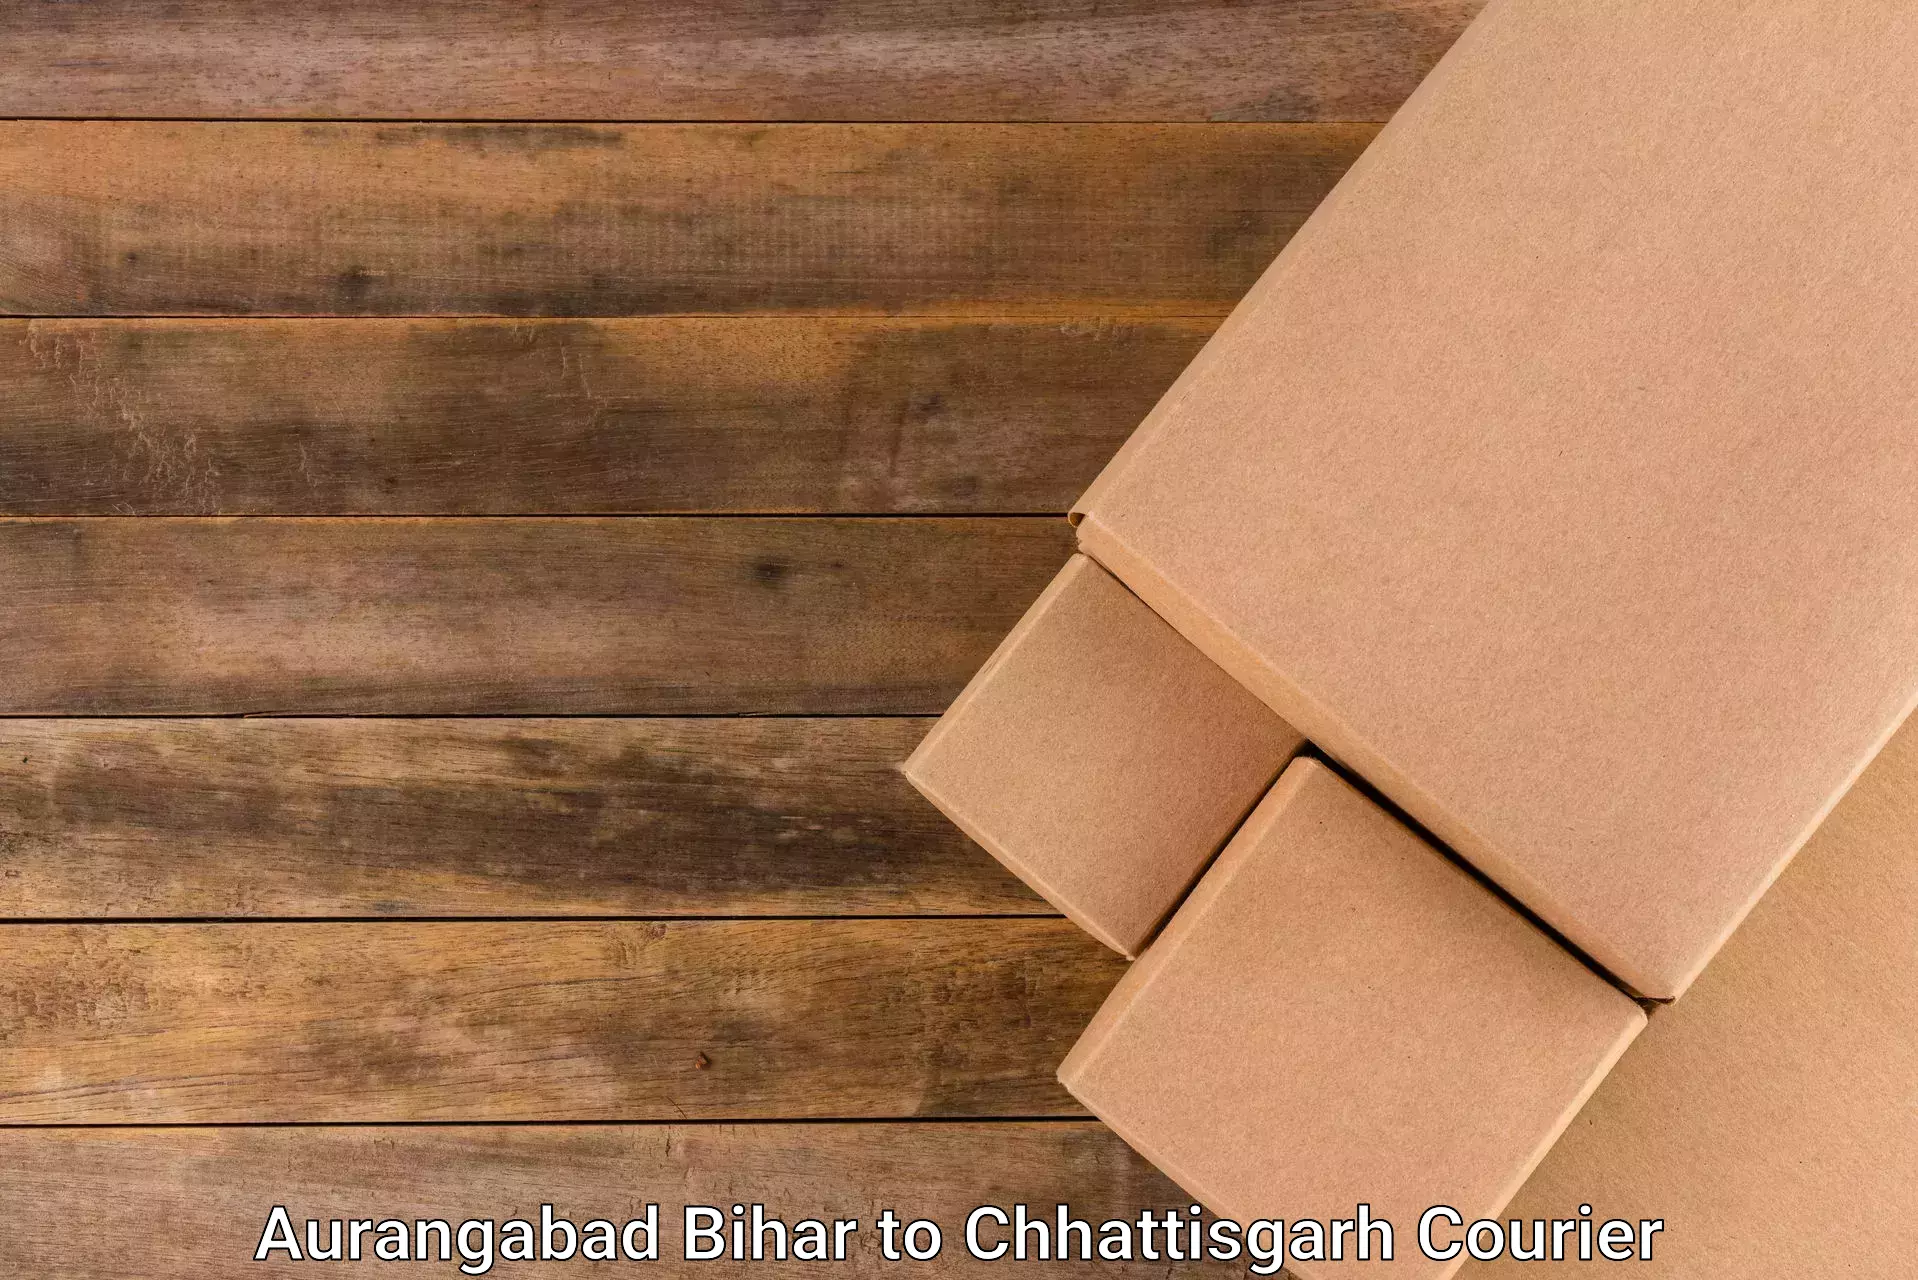 High-efficiency logistics Aurangabad Bihar to Berla